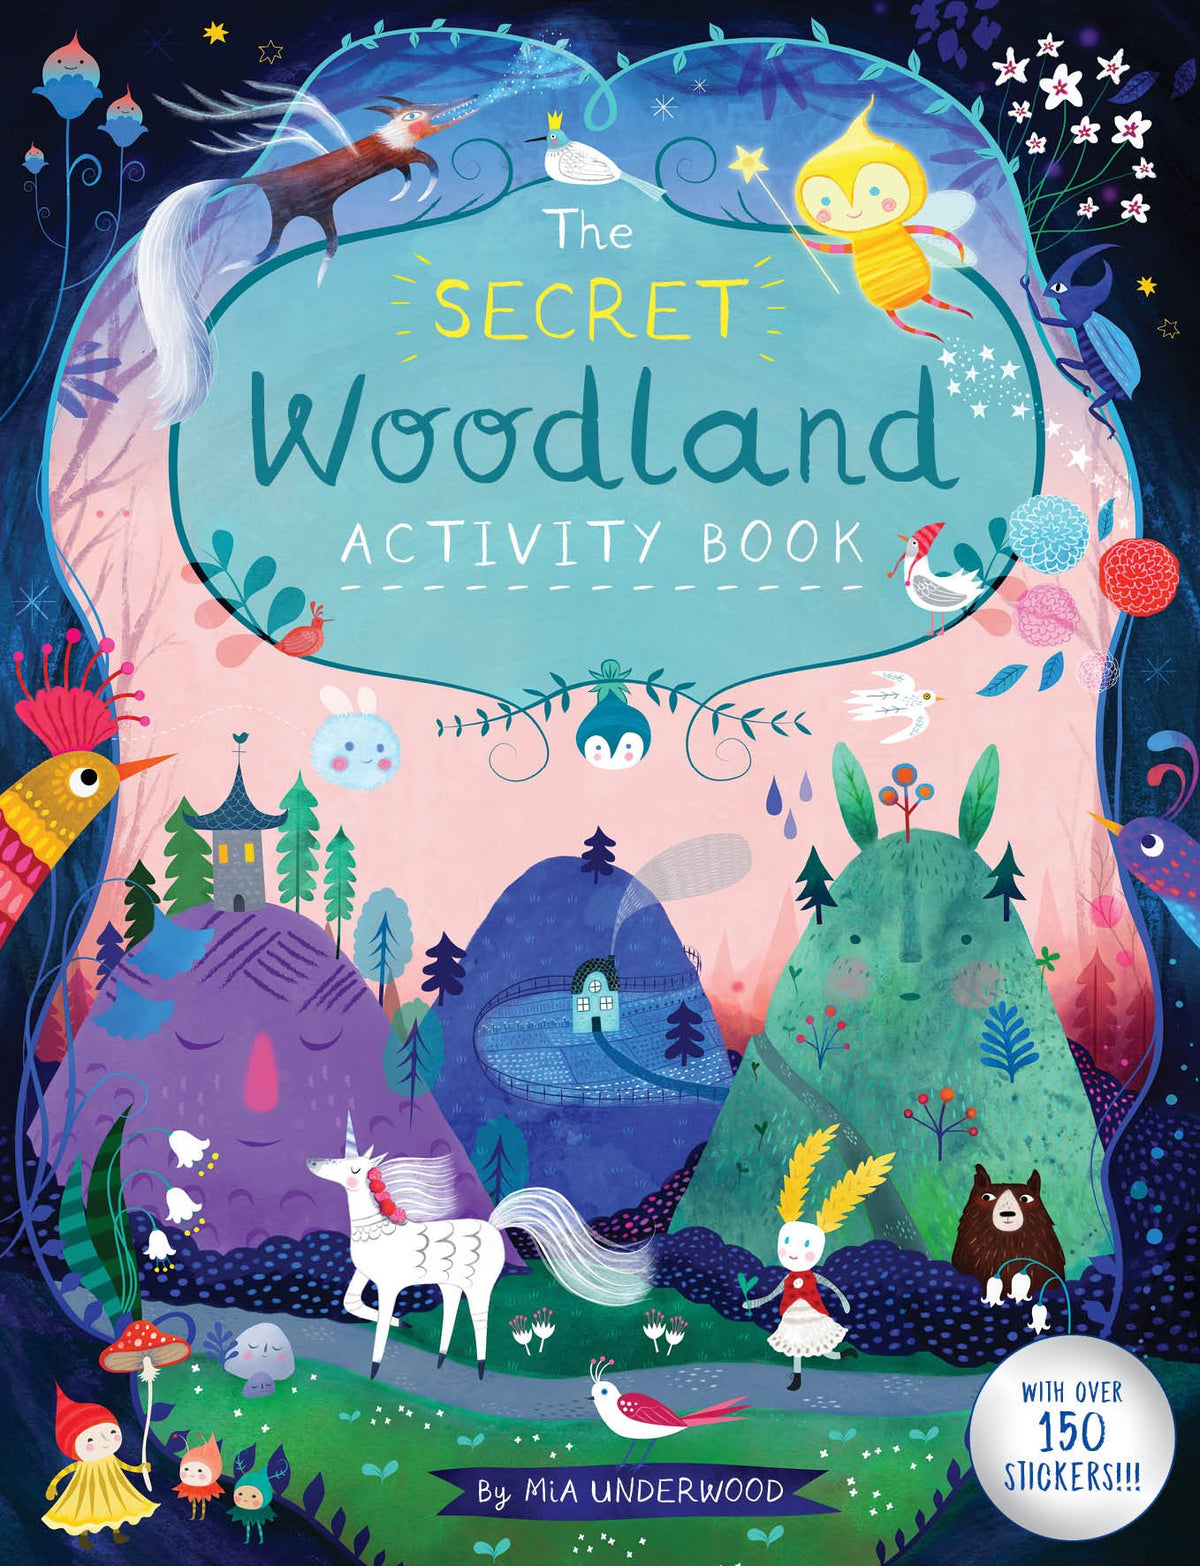 The Secret Woodland Activity Book by Mia Underwood